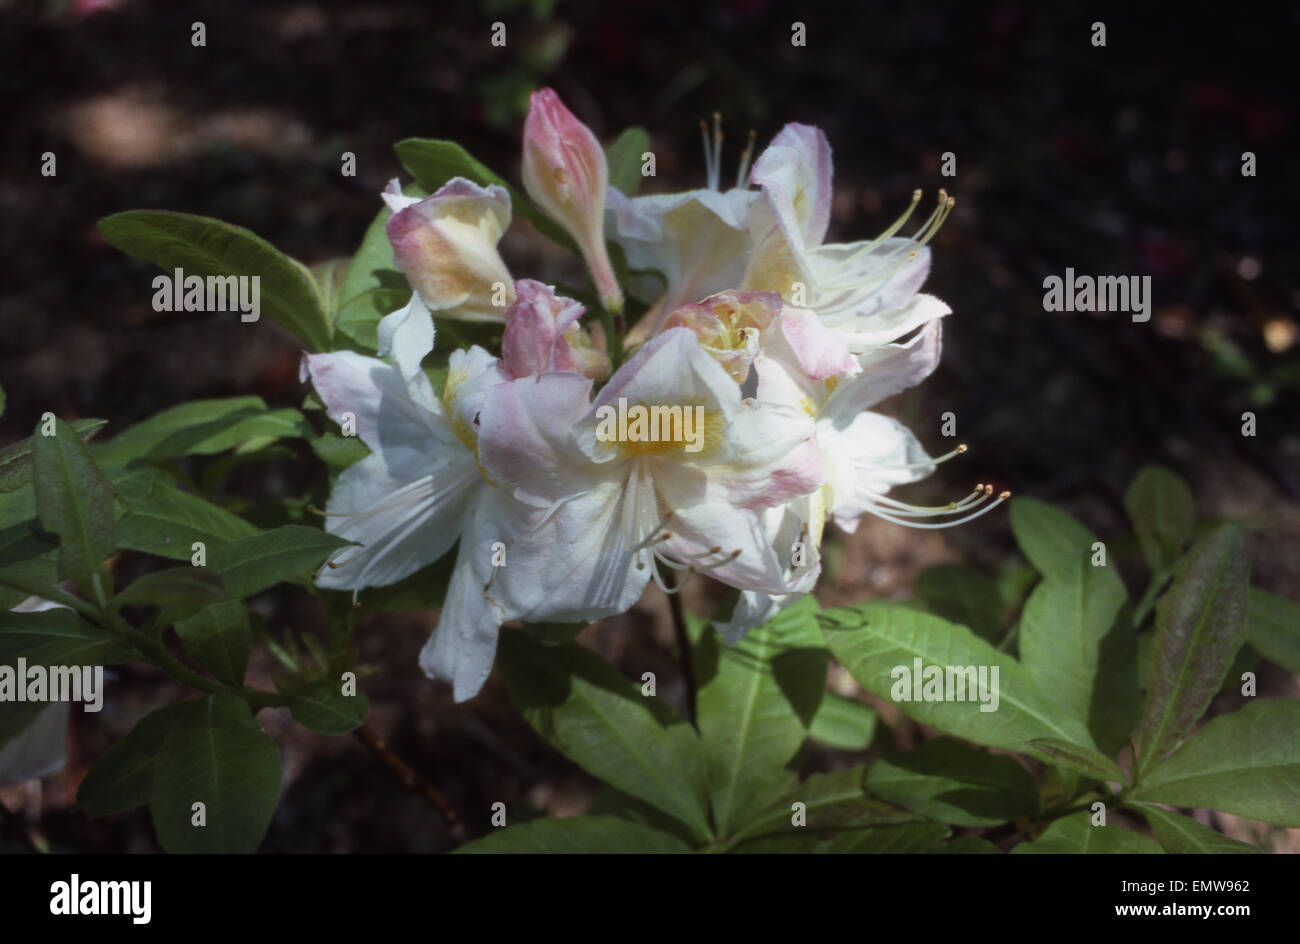 Rhododendron 'Silver Slipper' flower, UK garden Stock Photo